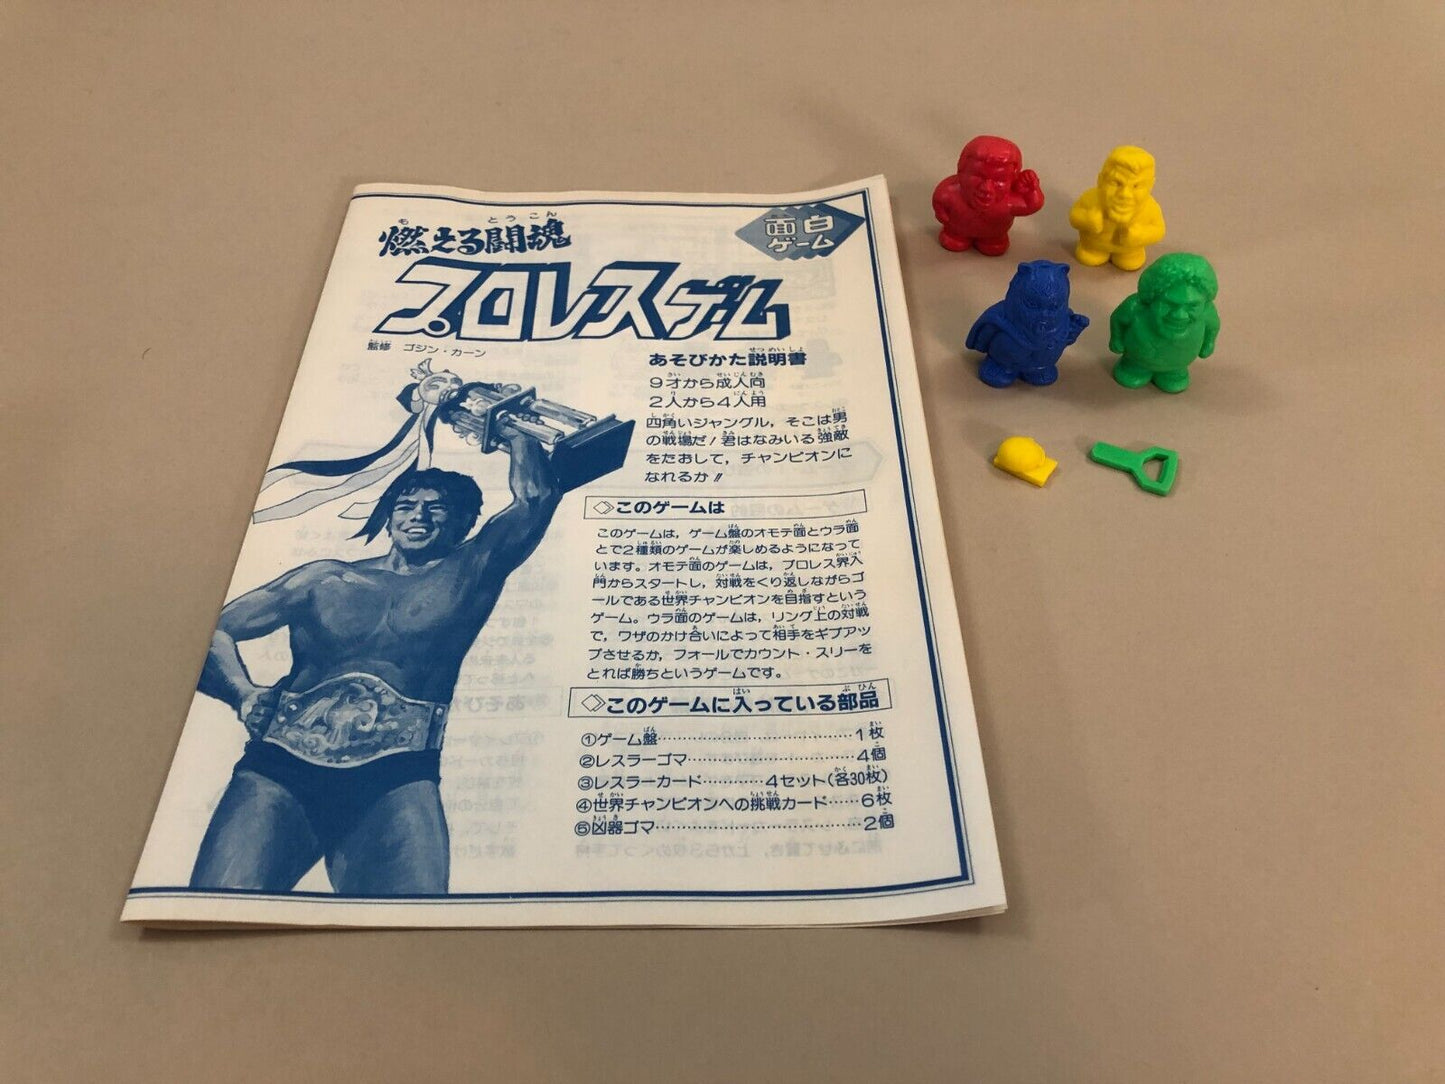 1981 NJPW Takara Pro-Wrestling Board & Card Game [With Tatsumi Fujinami, Andre the Giant, Antonio Inoki & Tiger Mask Keshi]